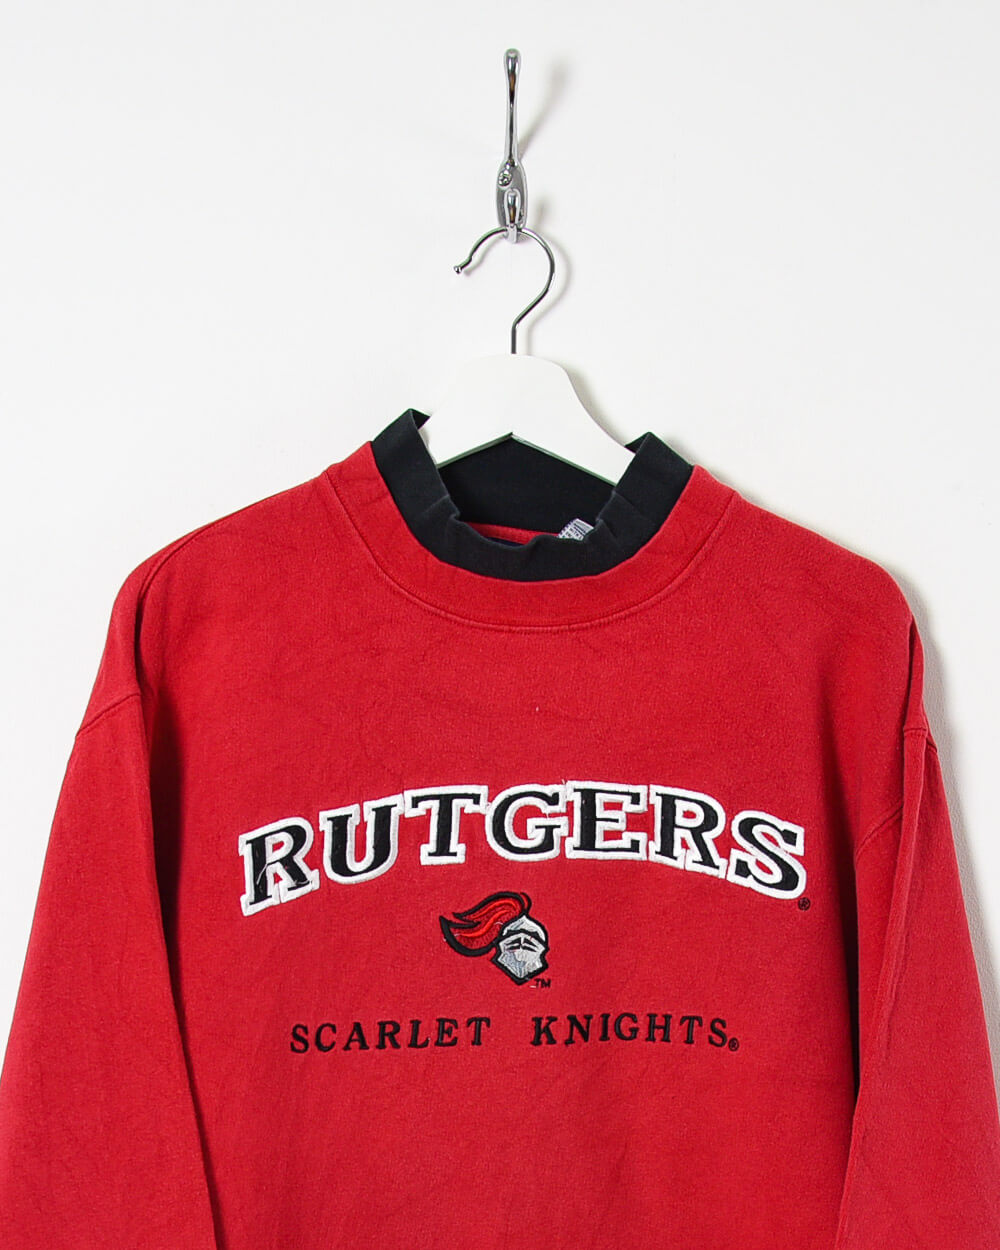 Rutgers Scarlet Knights cross country gear